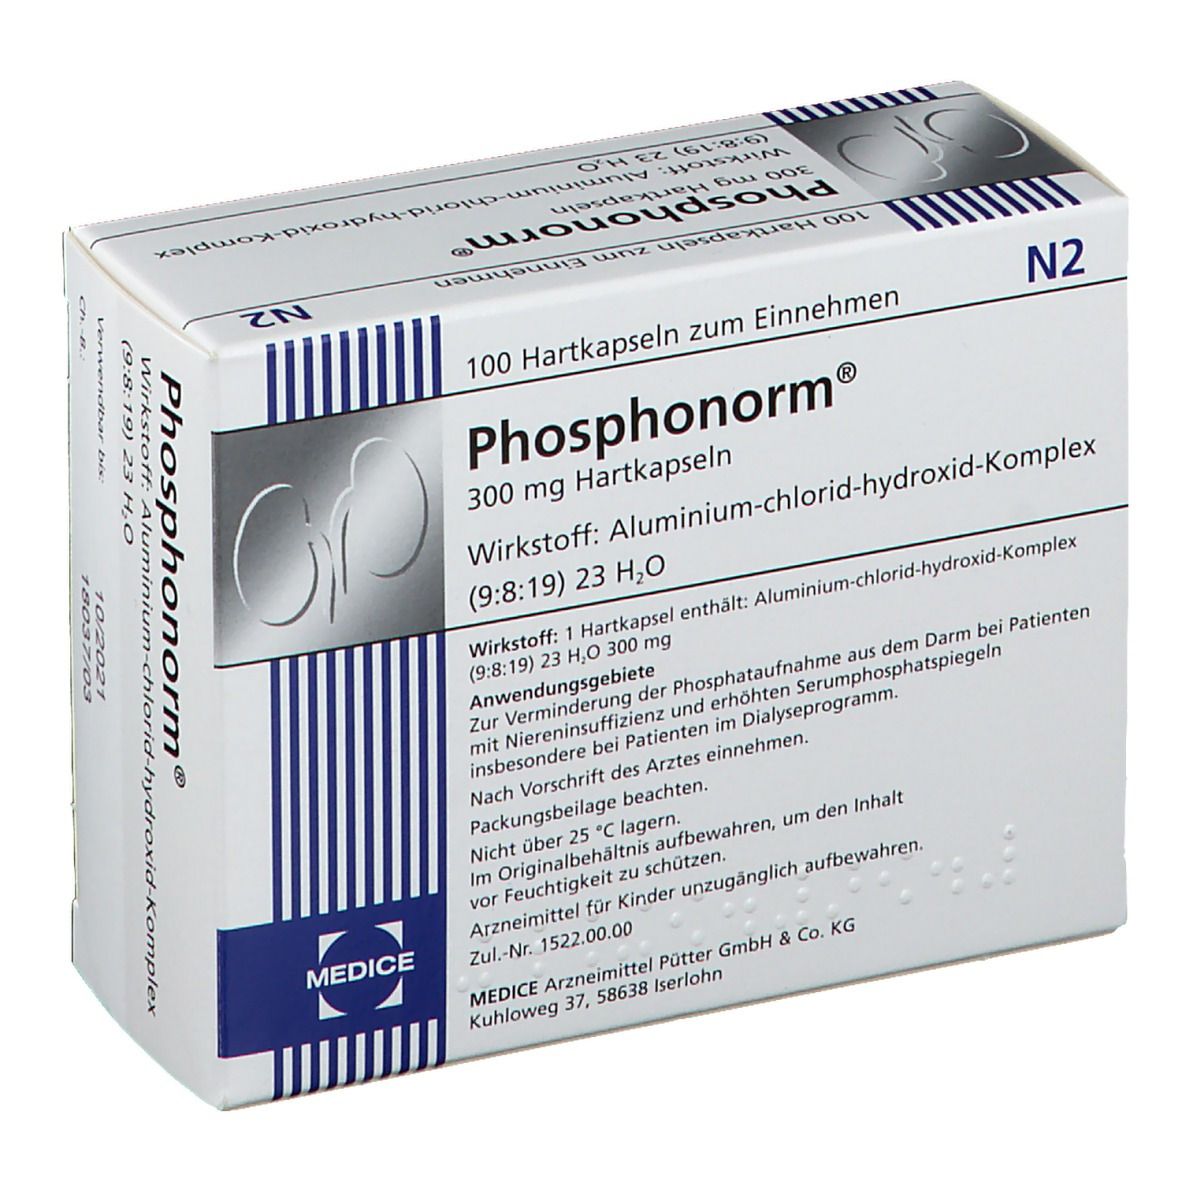 Phosphonorm® 300 mg